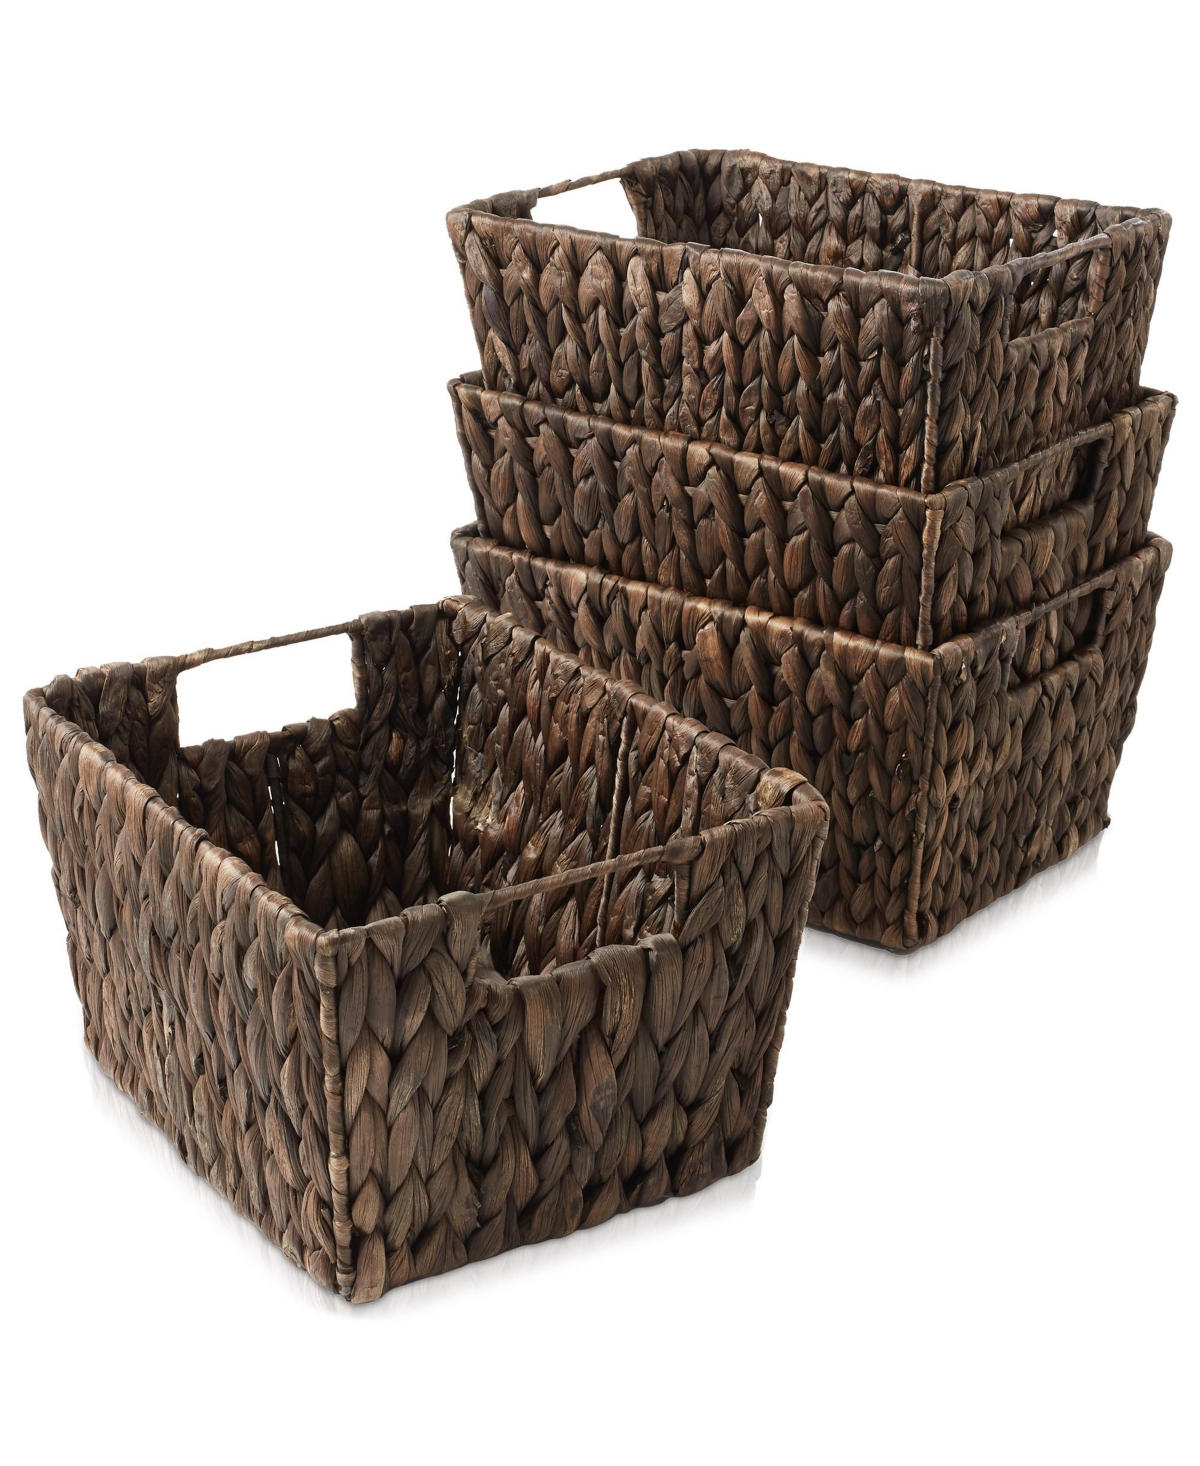 Set of 4 Water Hyacinth Storage Baskets with Handles - Natural, 12" x 9" x 6" Rectangular Storage Bins for Organizing Shelves, Blankets, Lau